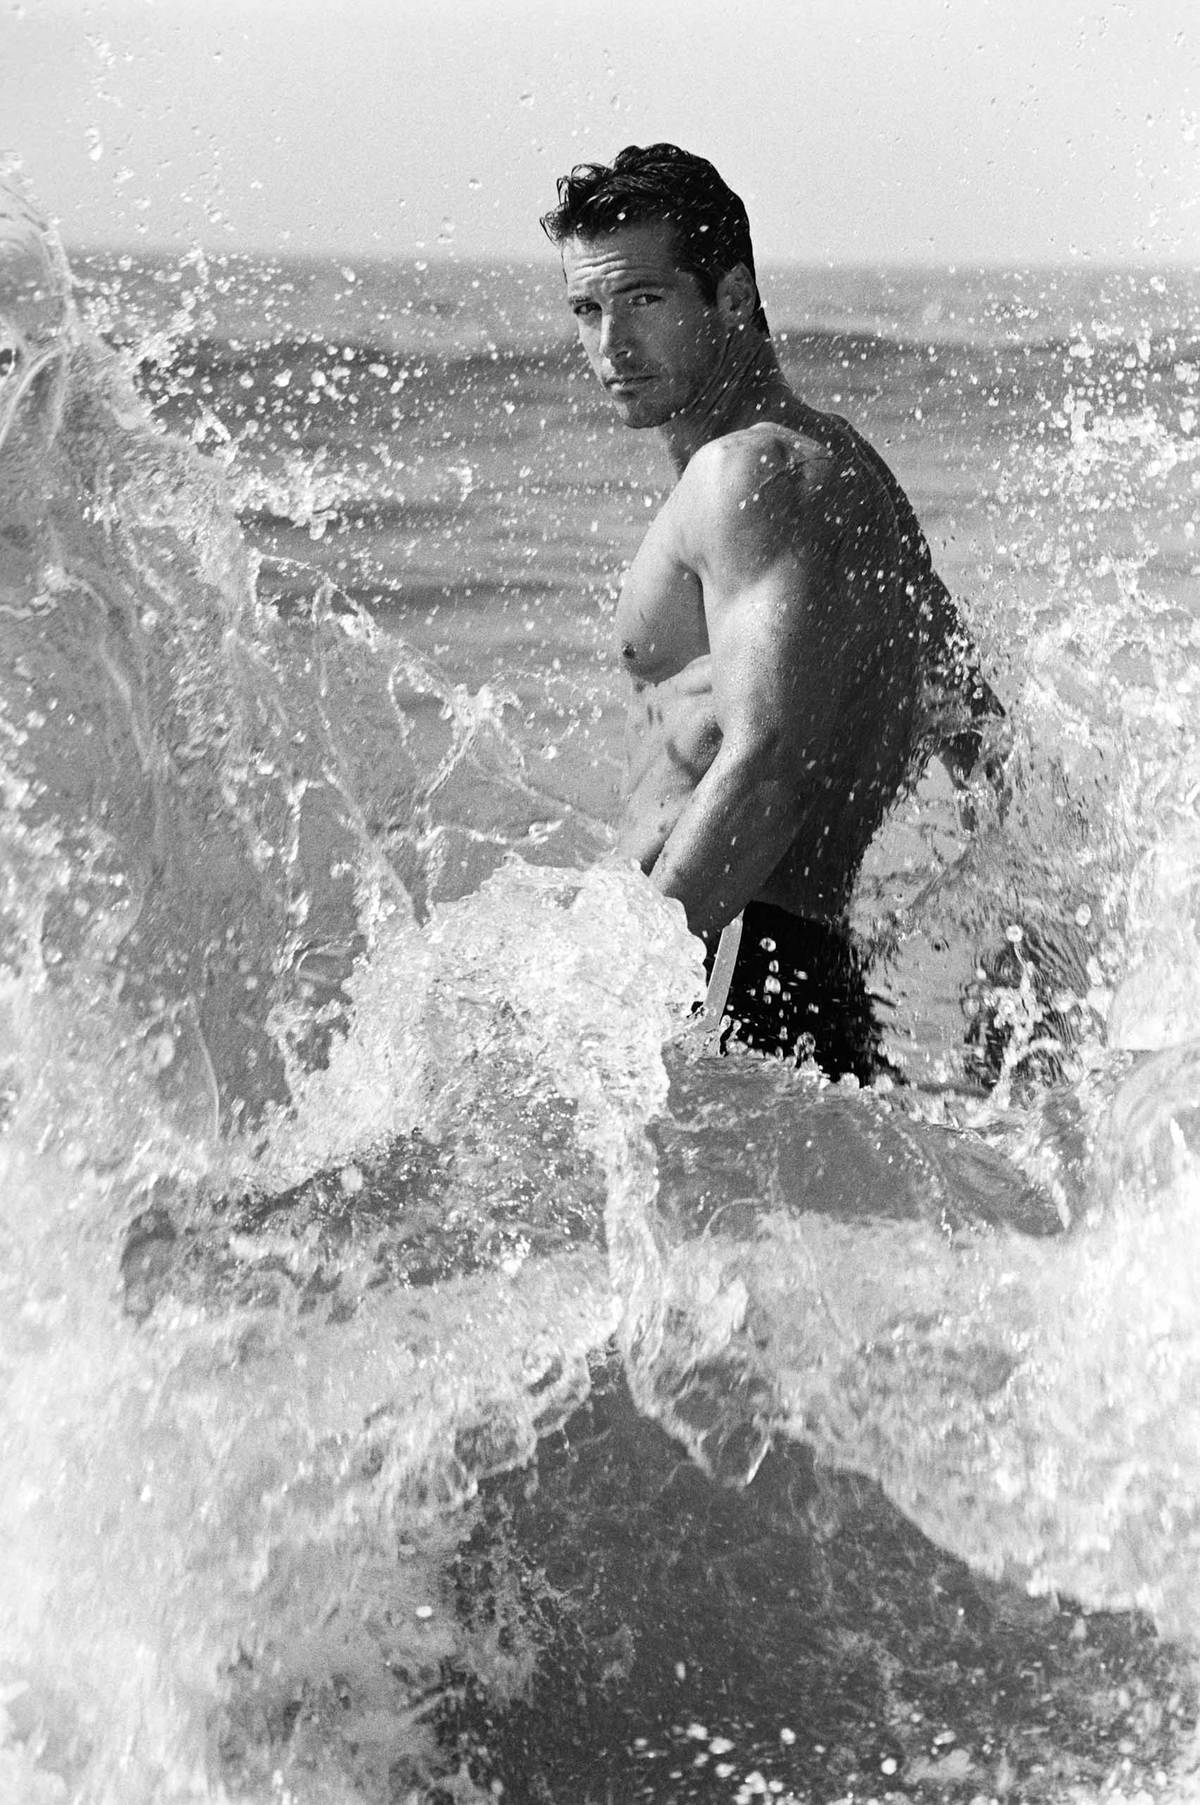 Robert_Goold_mens_men_male_muscle_bodybuilding_health_cover_US_Water_topless_waves_dorit_thiesLB_DoritThies_1036 copy.jpg